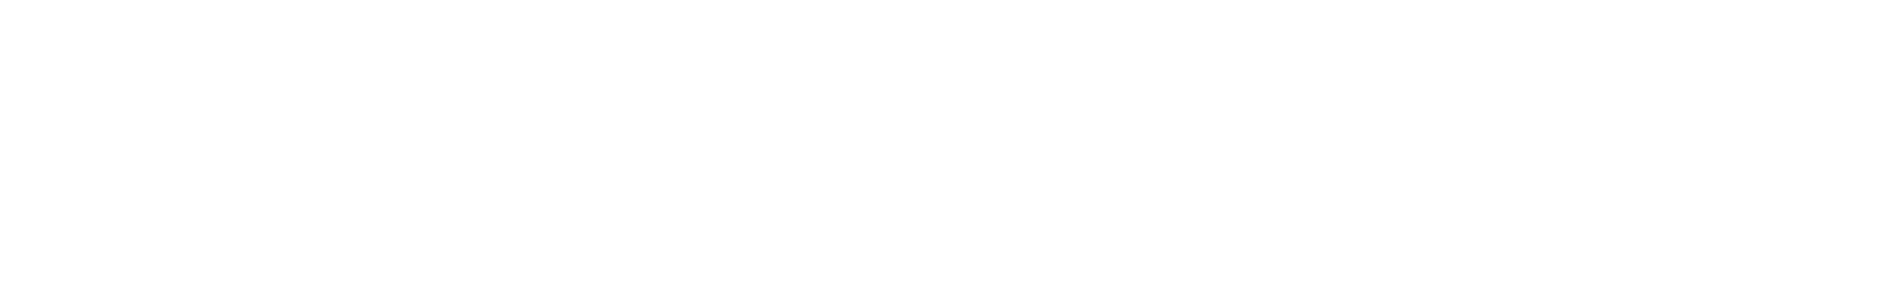 Munk School of Global Affairs & Public Policy | University of Toronto